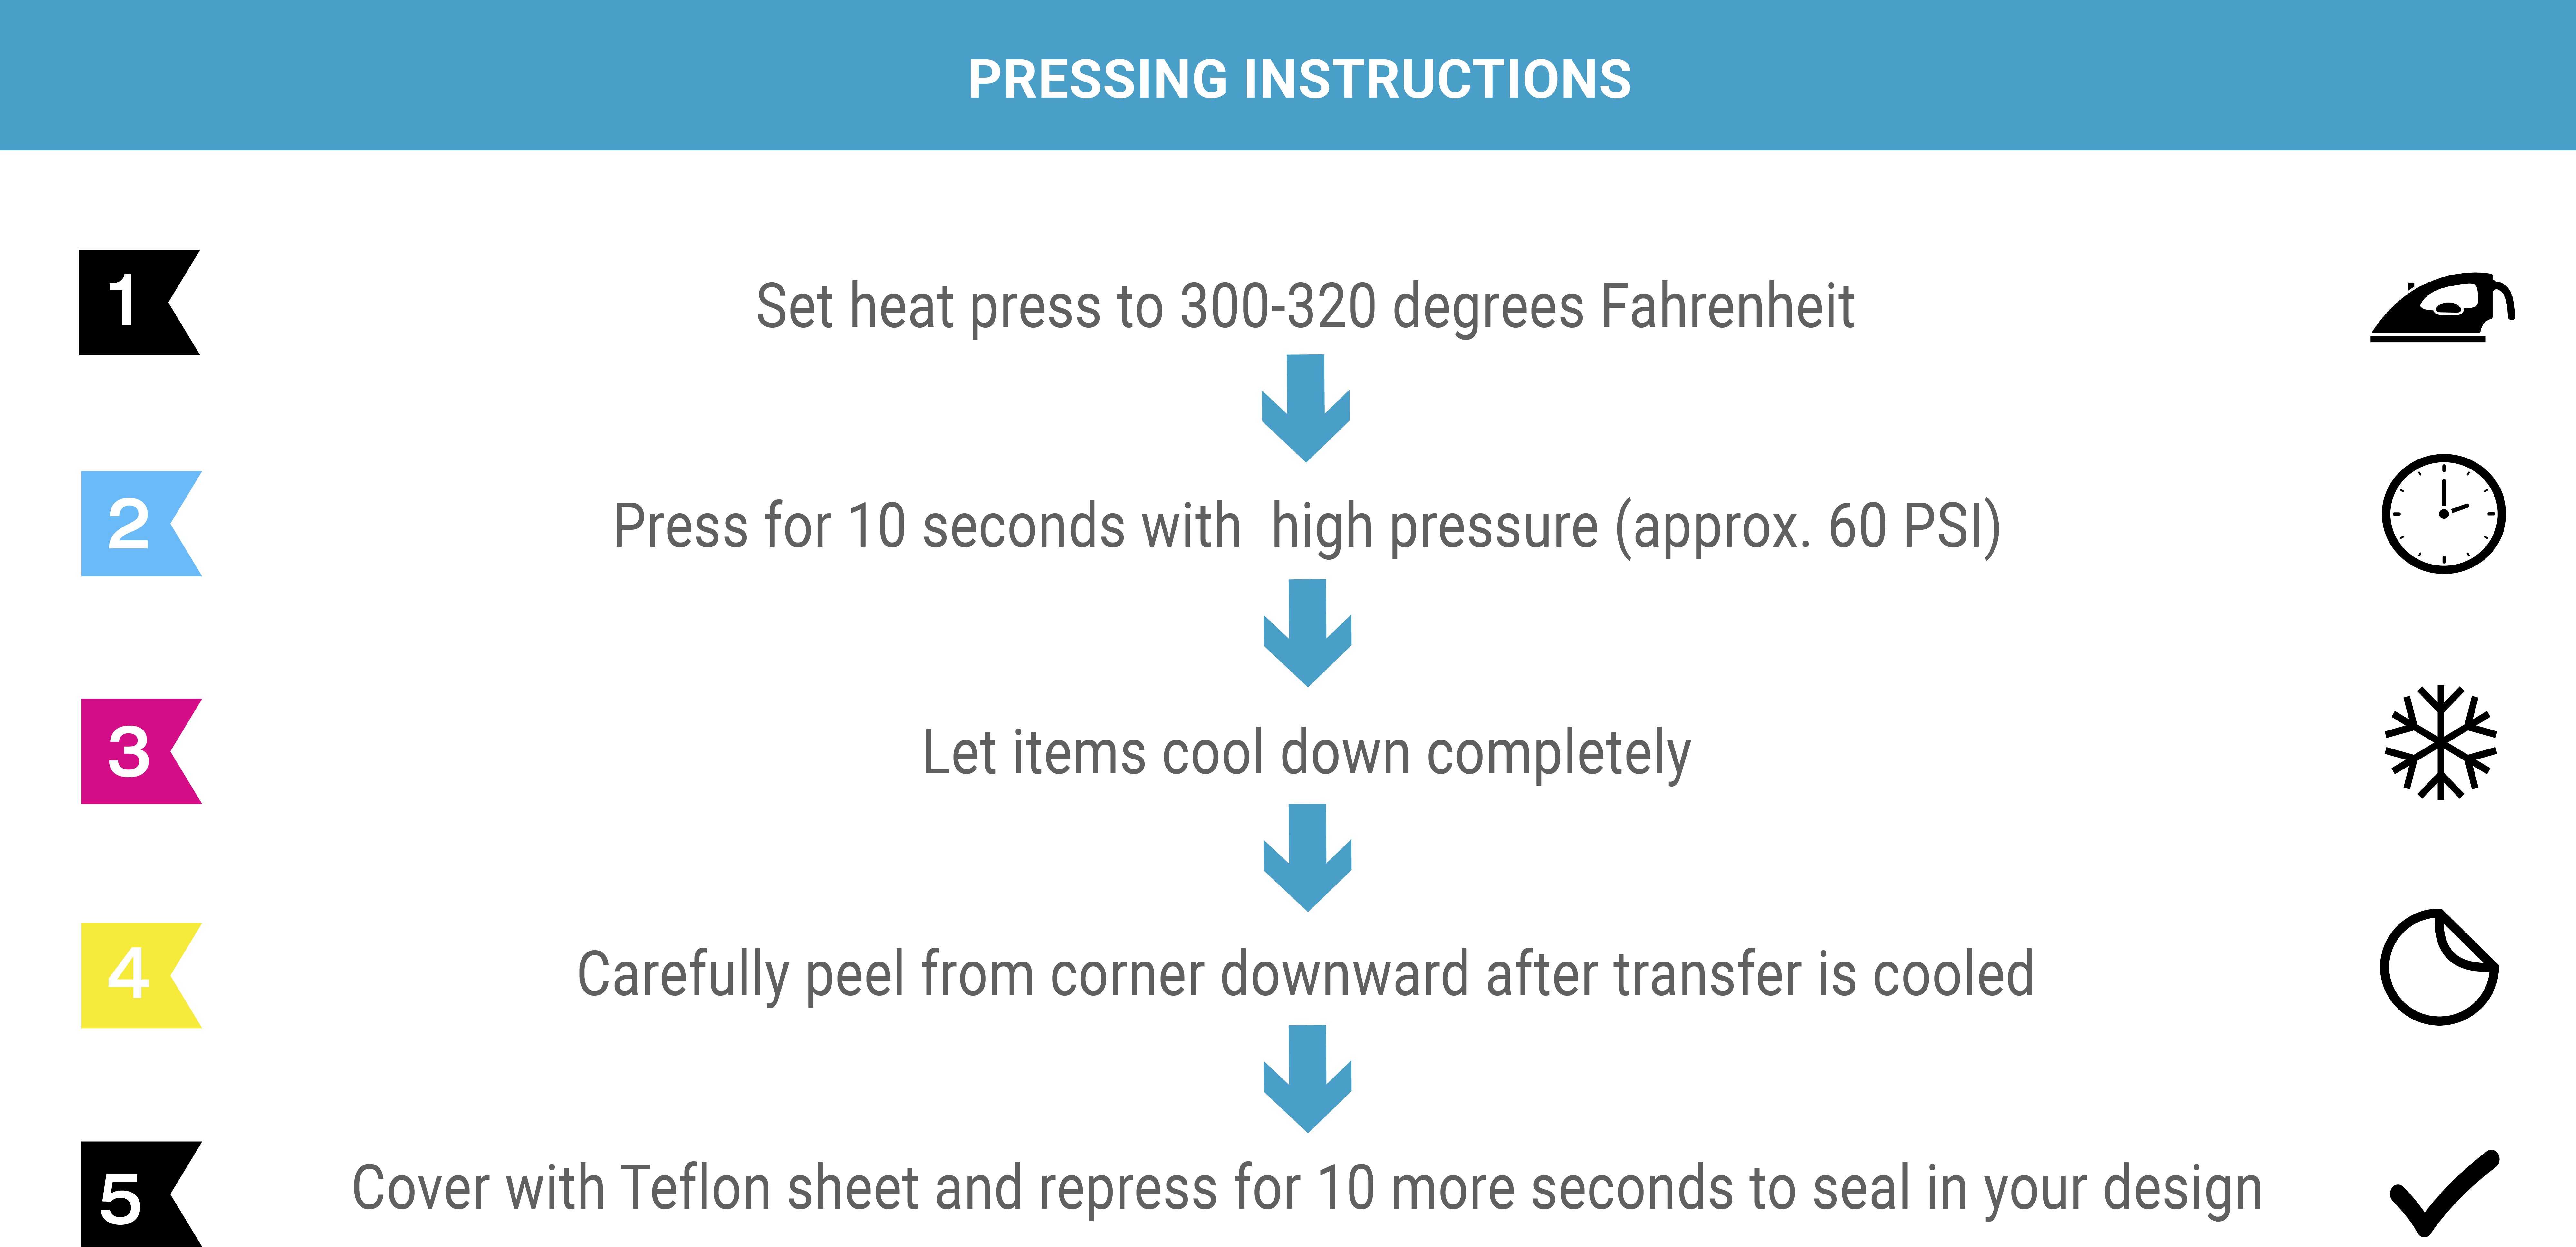 Pressing instructions